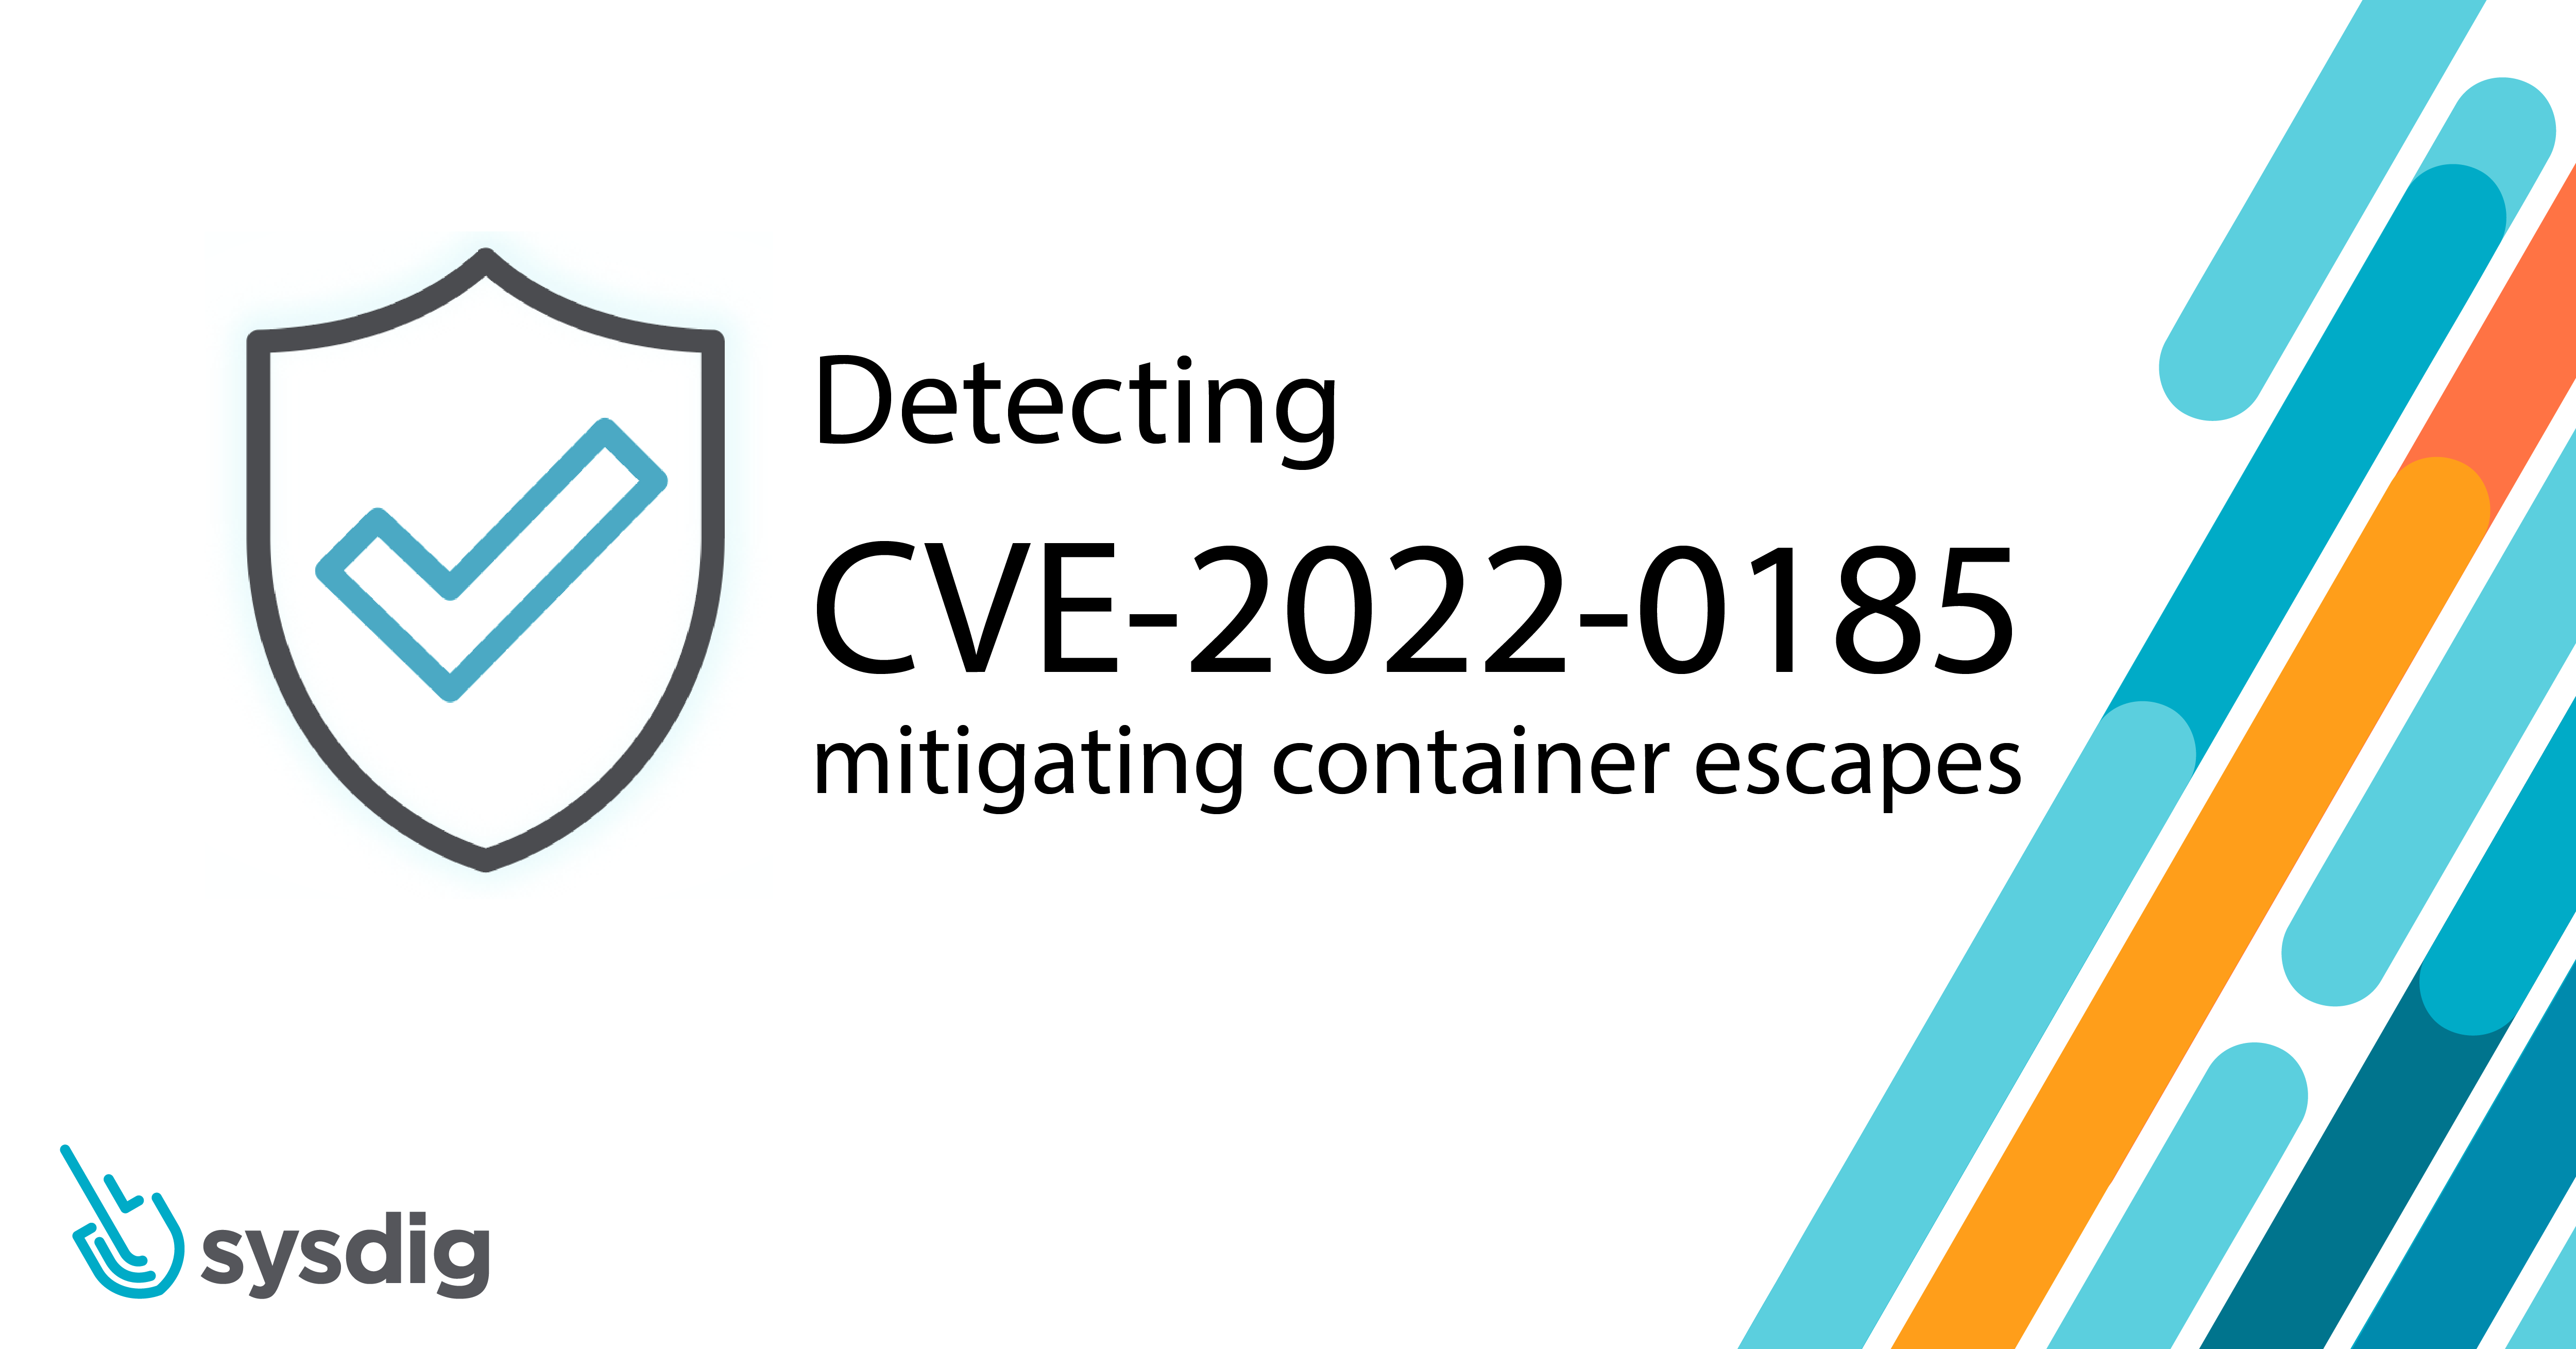 Detecting CVE-2022-0185 Container escapes